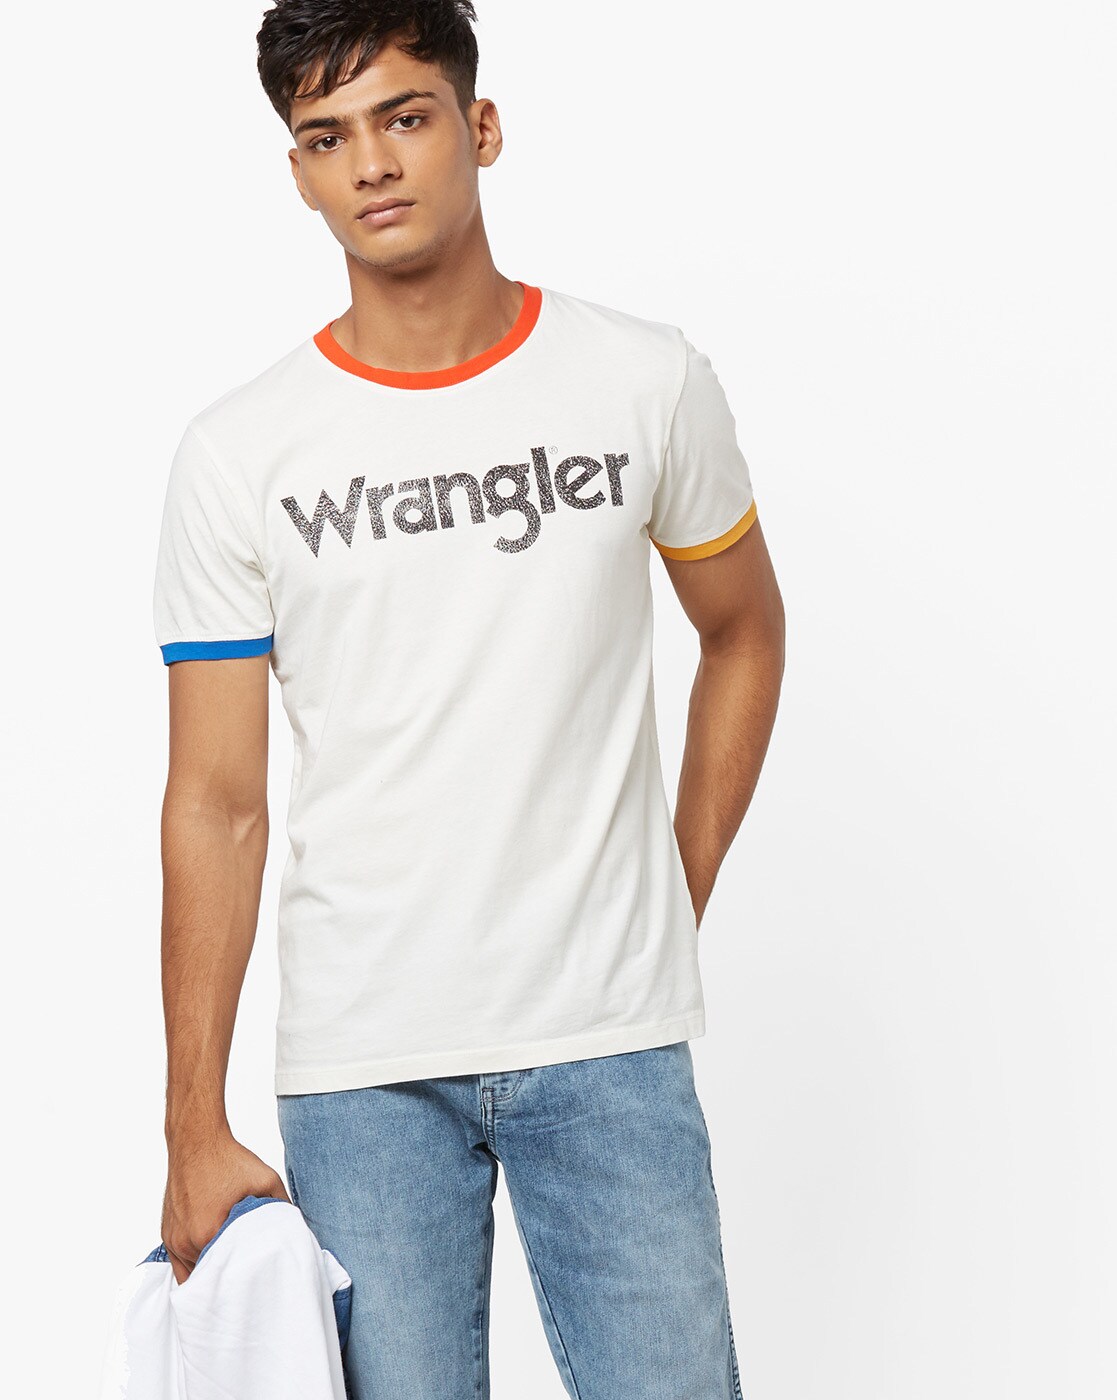 wrangler t shirts india